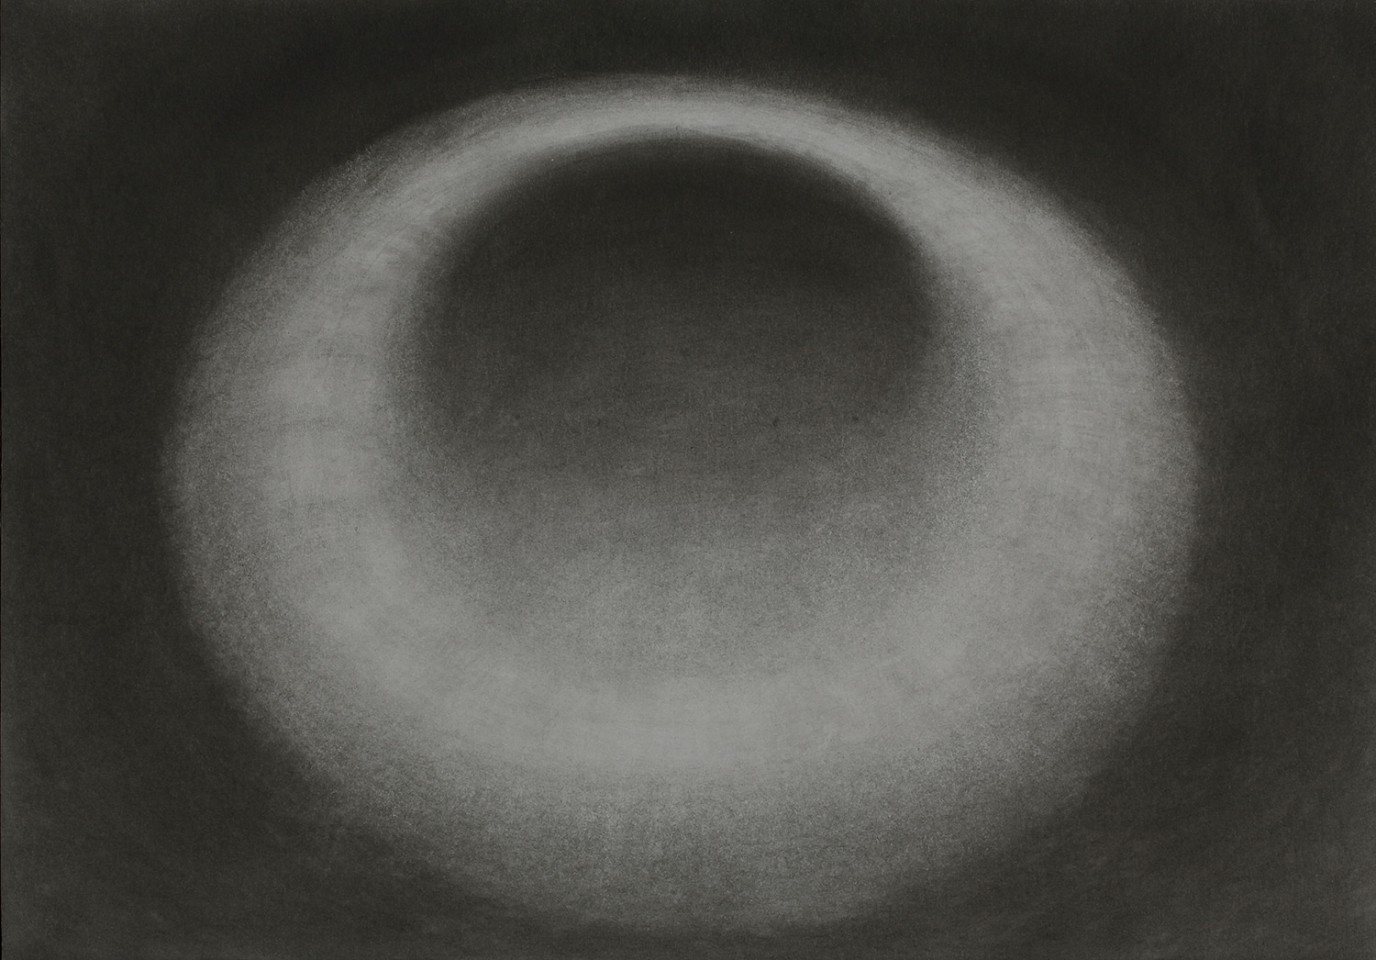 Vaclav Cigler, Sphere #1
2010, Graphite on paper